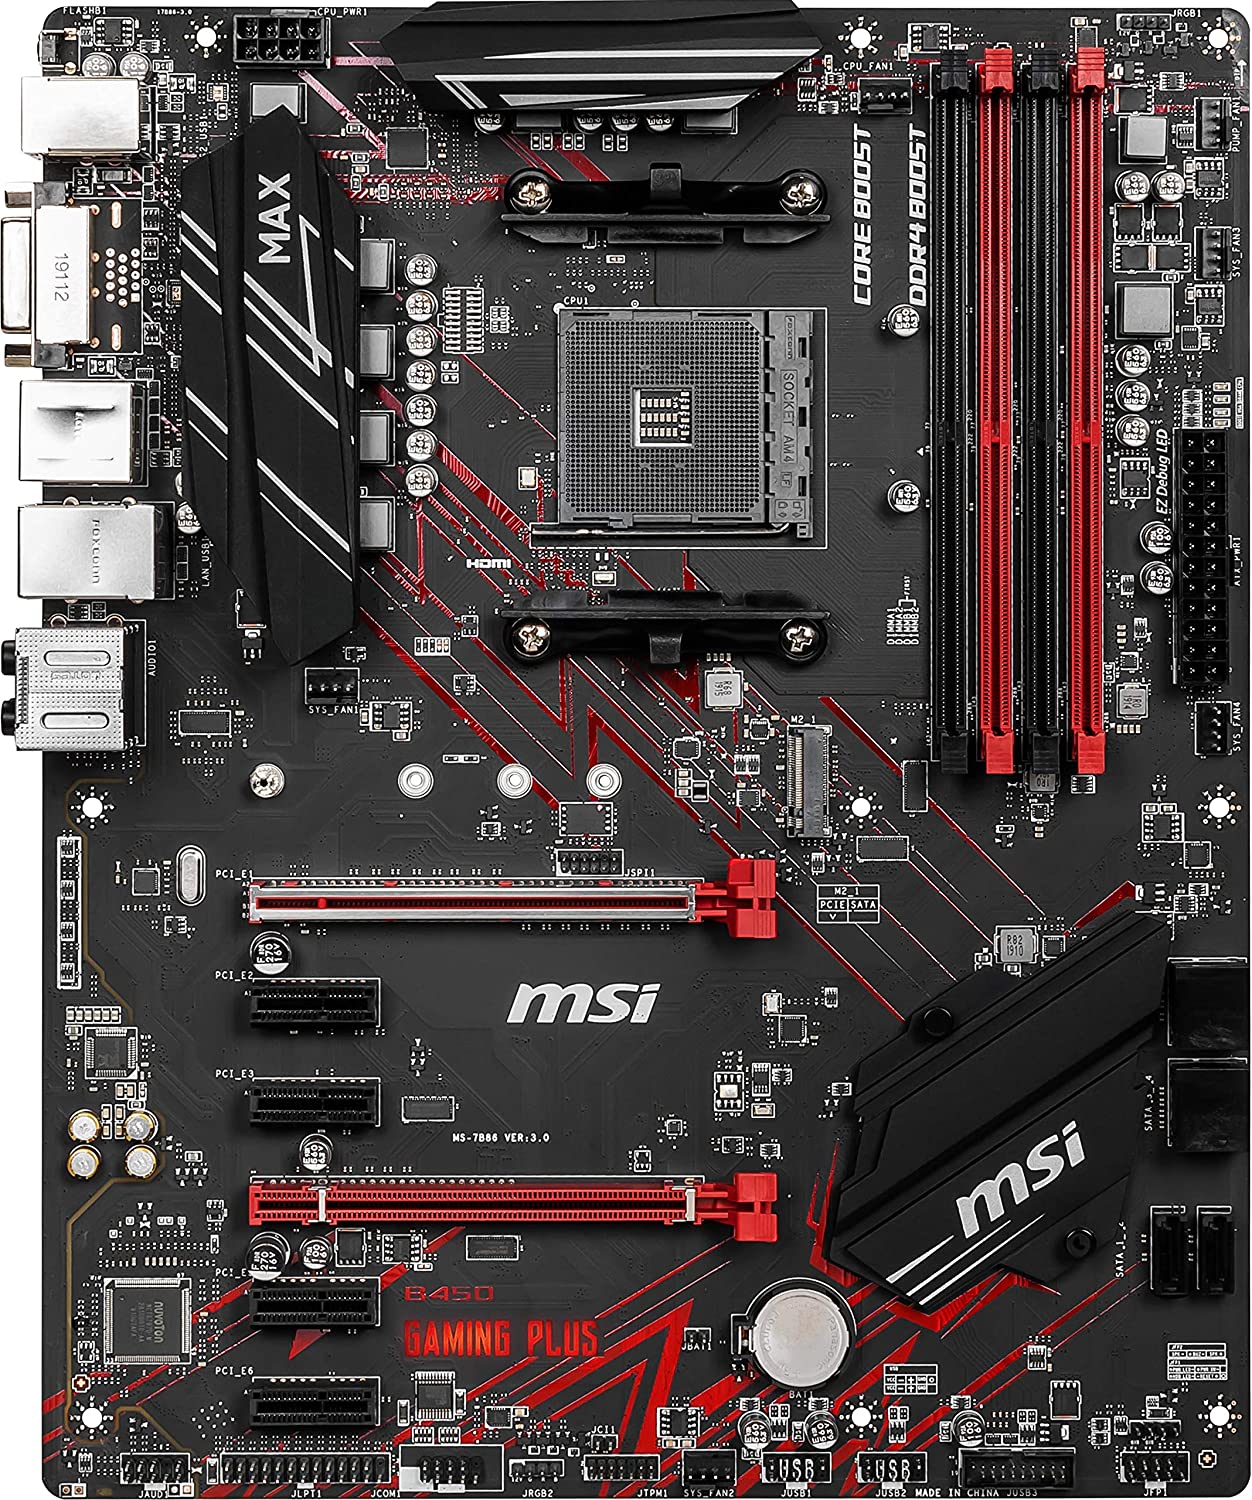 MSI Performance Gaming AMD Ryzen 2ND and 3rd Gen AM4 M.2 USB 3 DDR4 DVI HDMI Crossfire ATX Motherboard (B450 GAMING PLUS Max)